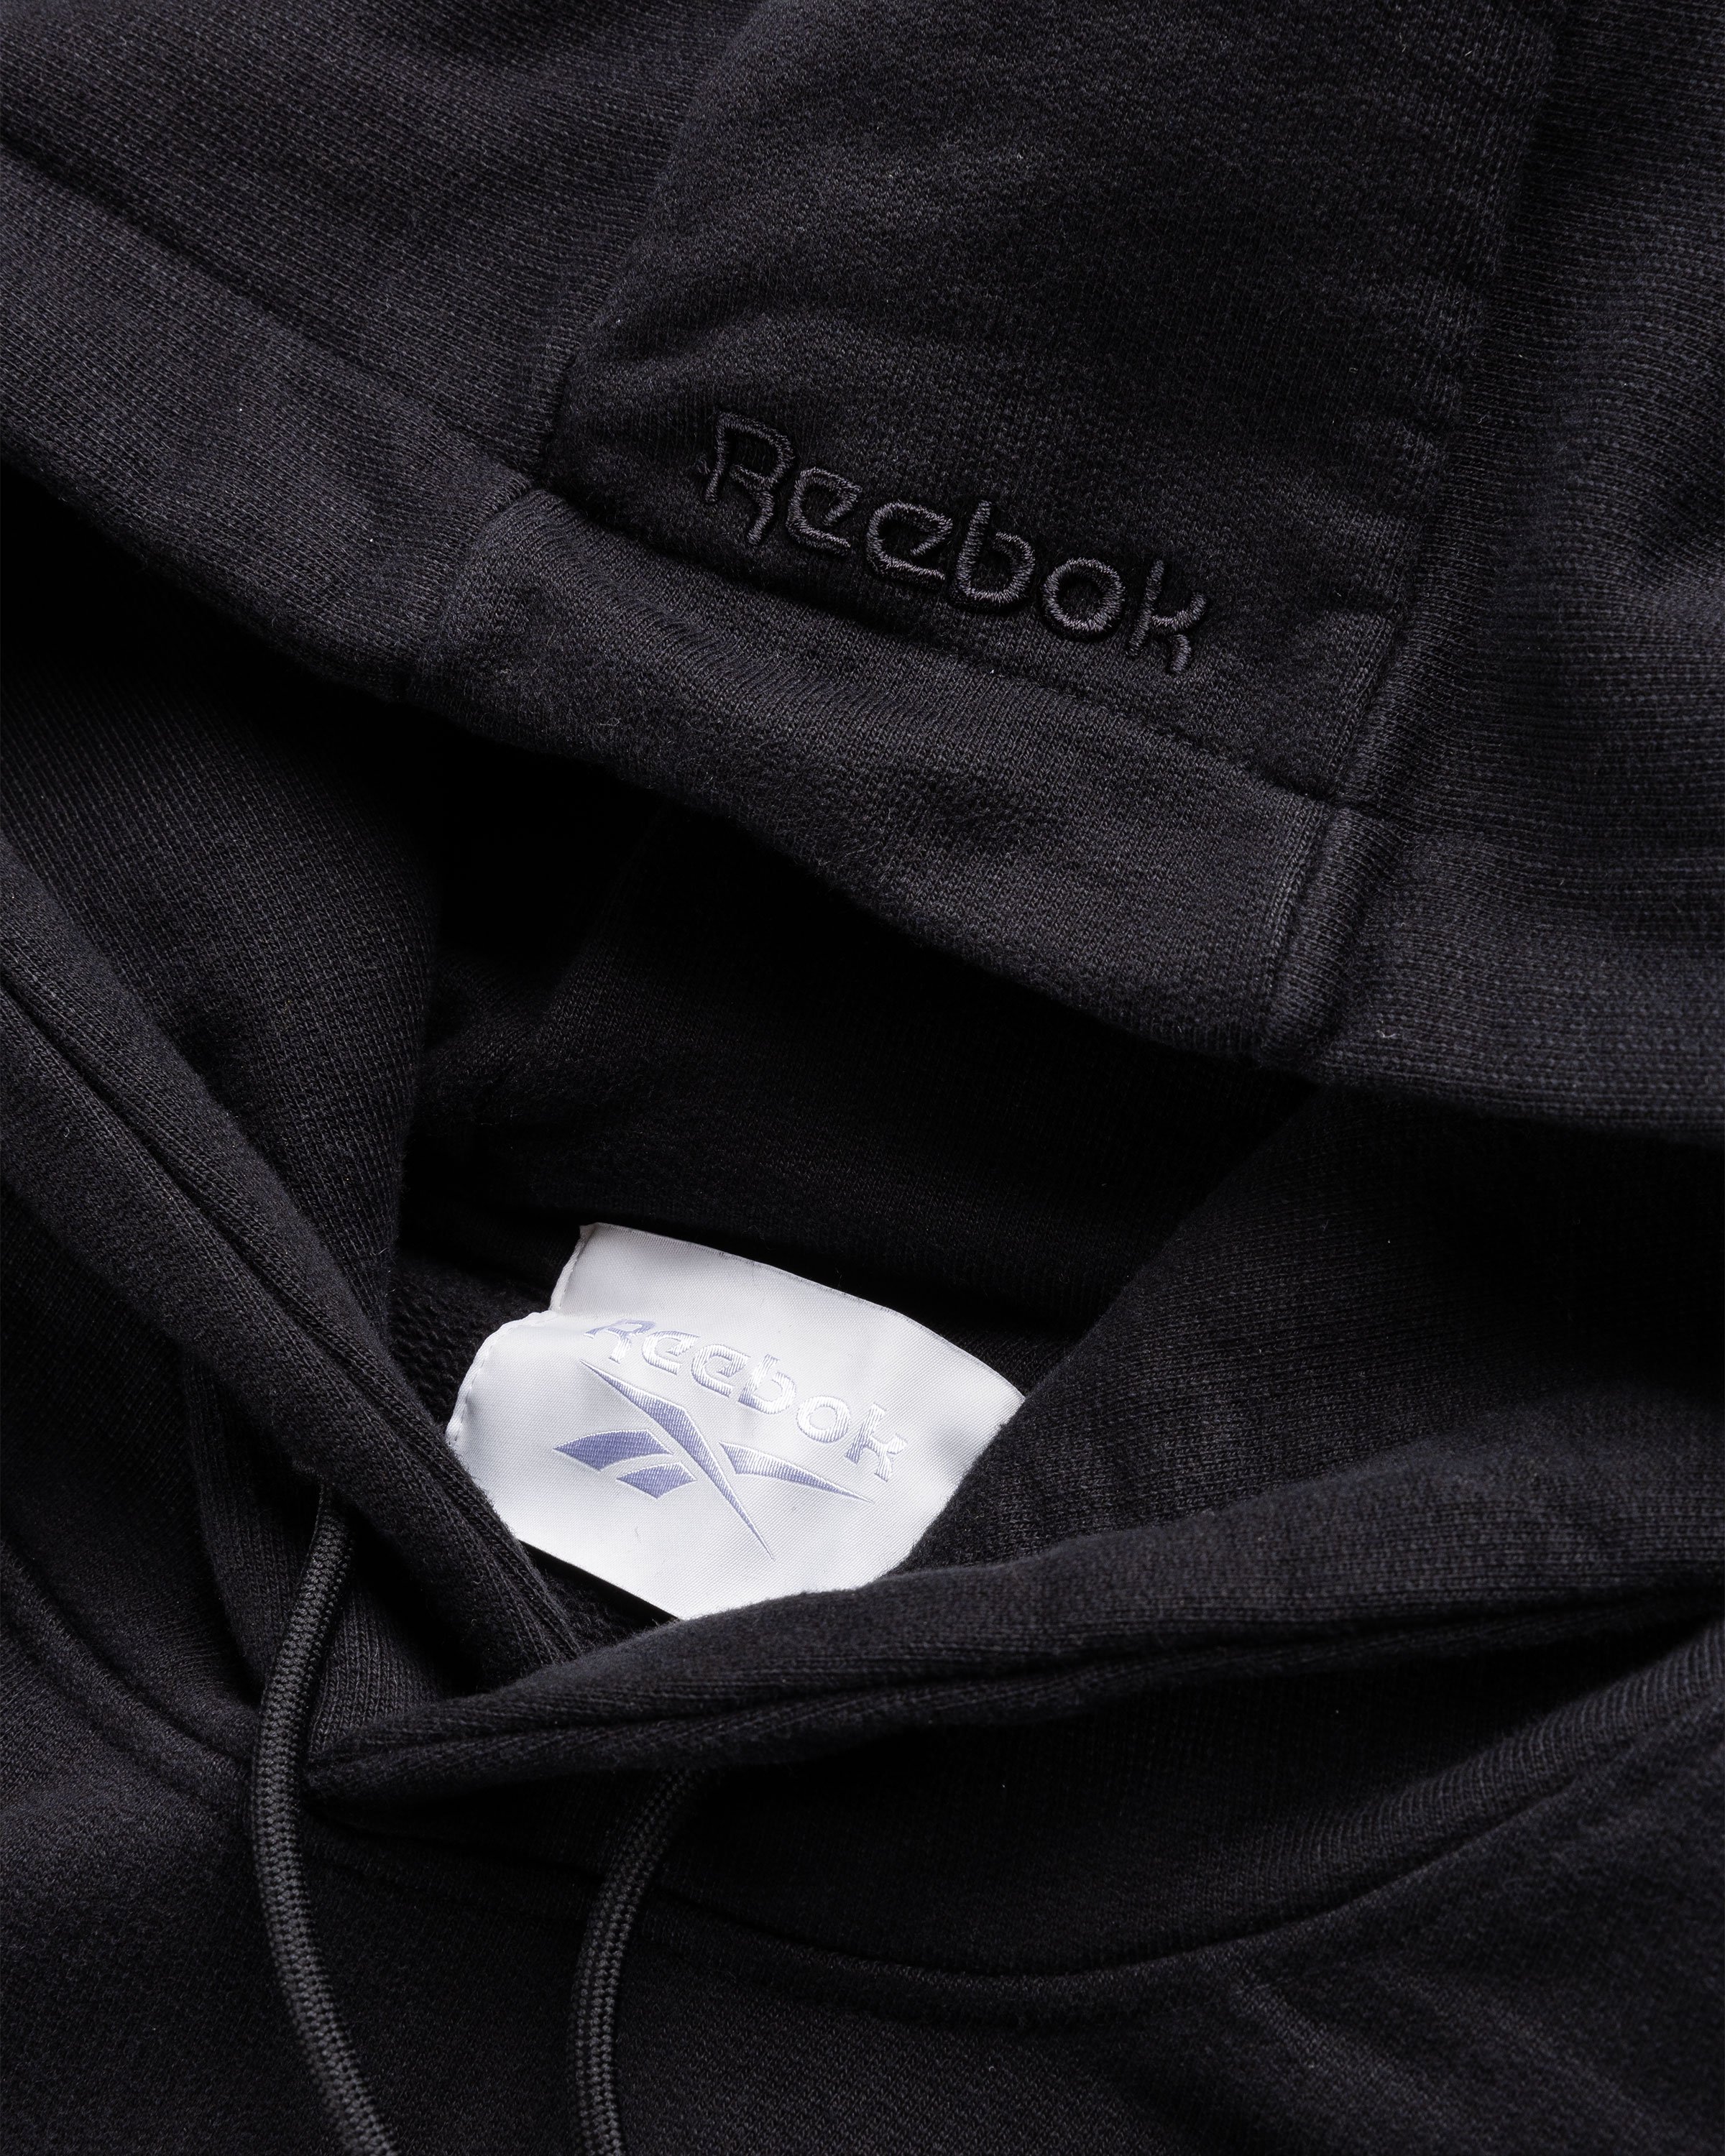 Reebok - Oversized Piped Hoodie Black - Clothing - Black - Image 6